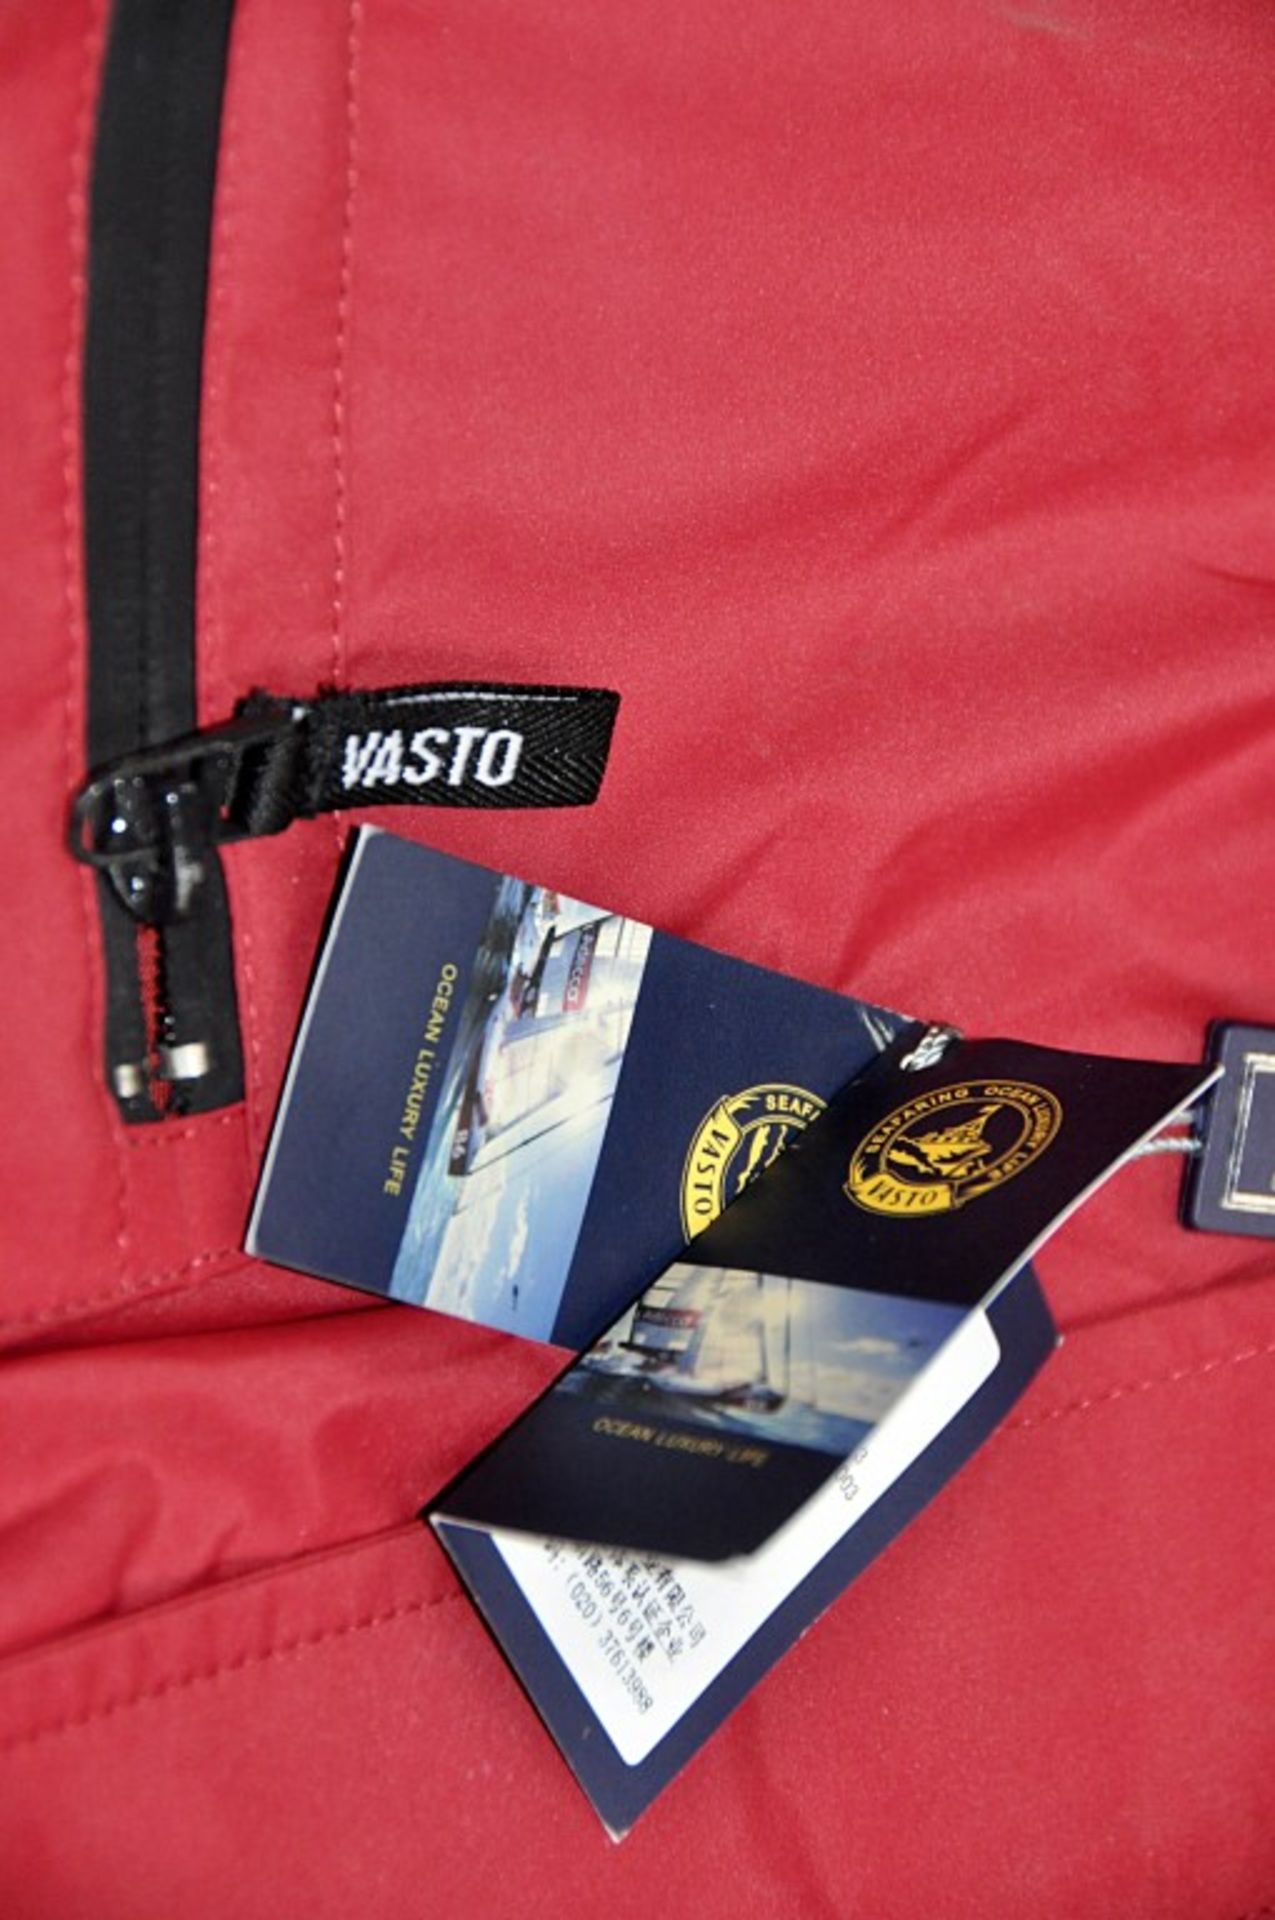 1 x Men's Hooded Seafaring Jacket By International Luxury Brand "Vasto" (SAZ7231/431) – Size: - Image 4 of 7